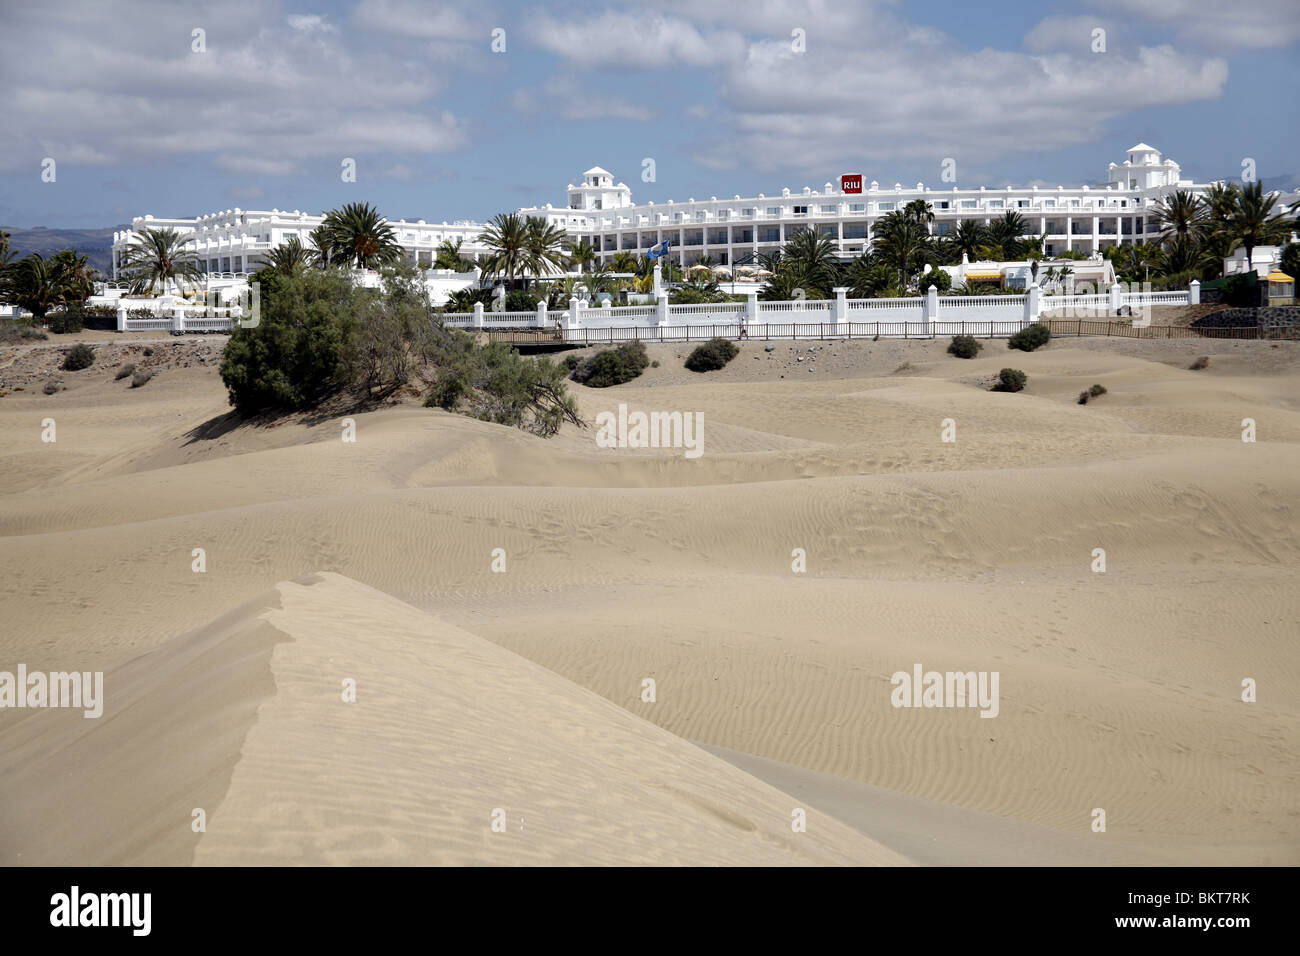 Hotel Riu Palace in Playa del Ingles, Gran Canaria Stock Photo